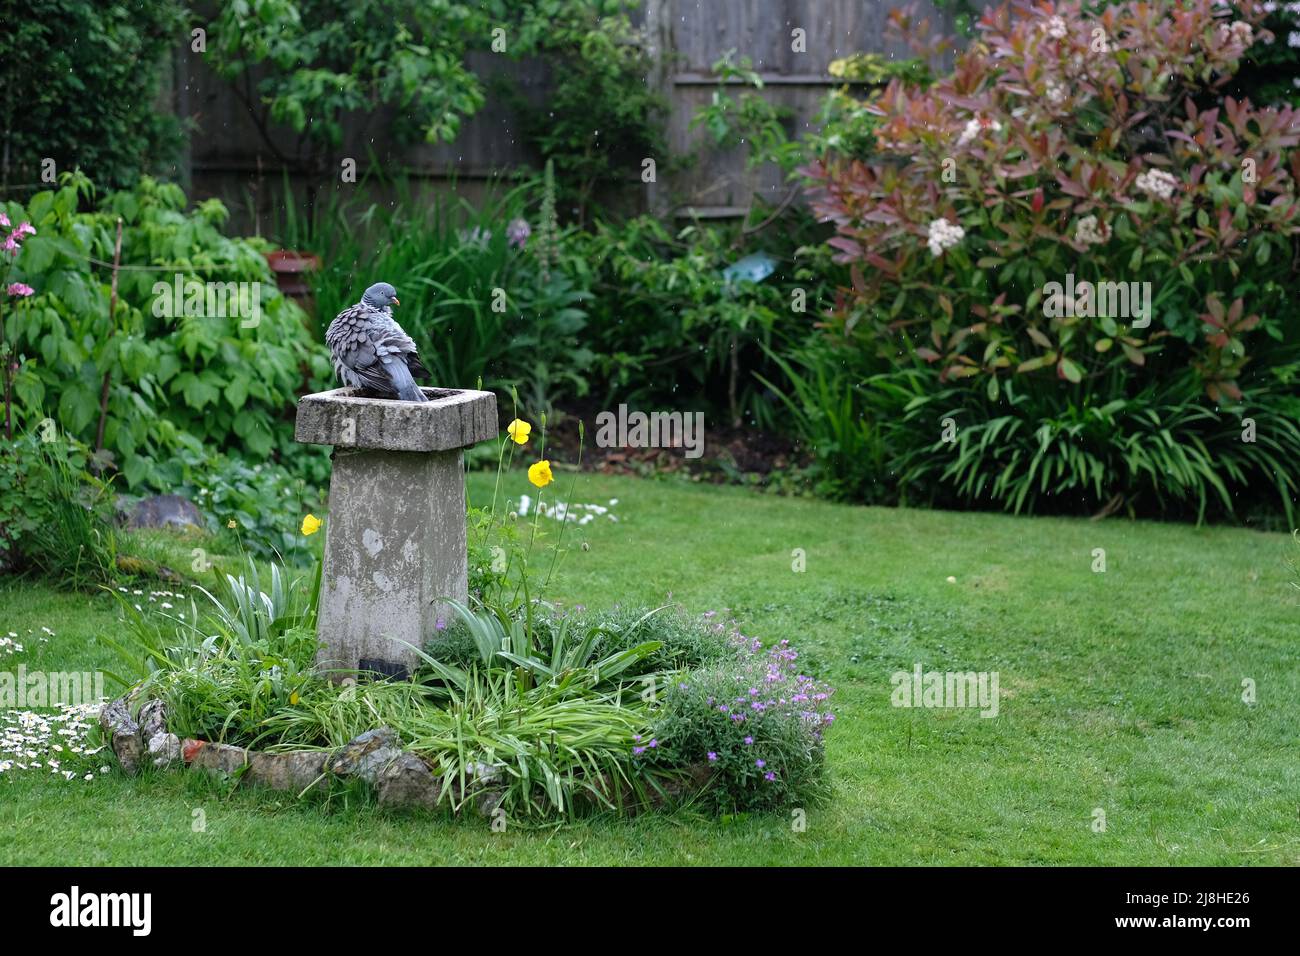 A pigeon washing in a bird bath in an English garden Stock Photo